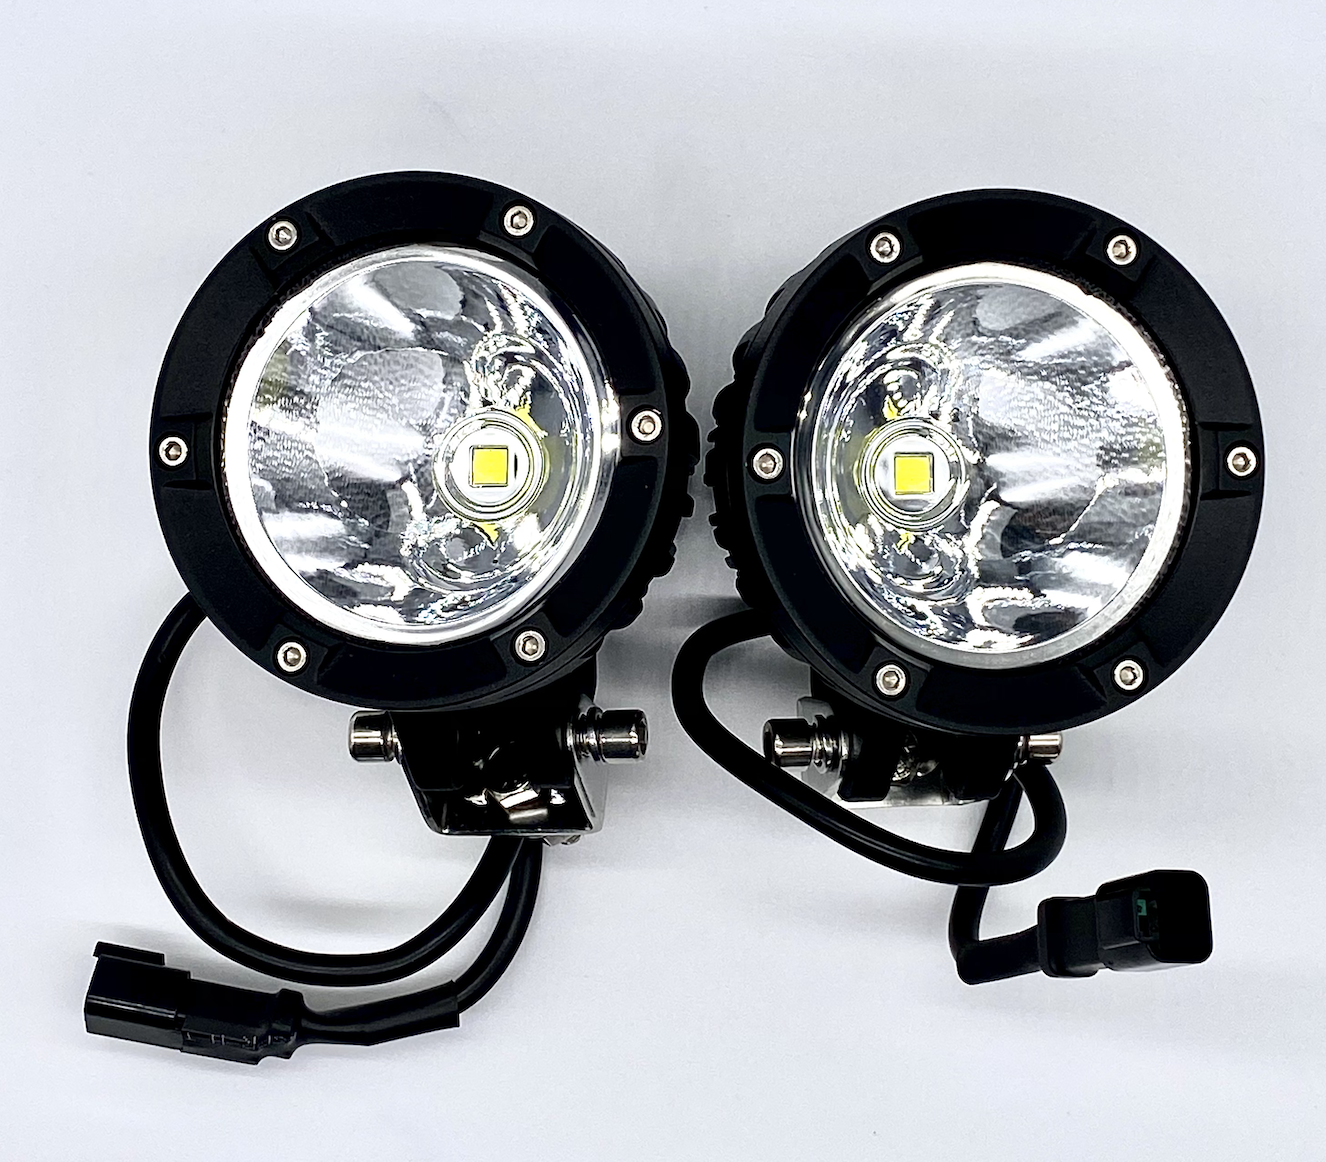 Anoi Bijlage vriendelijke groet Code 4 LED 4" 60 Watt round Spot Light, sold in pairs - Code 4 LED Supply